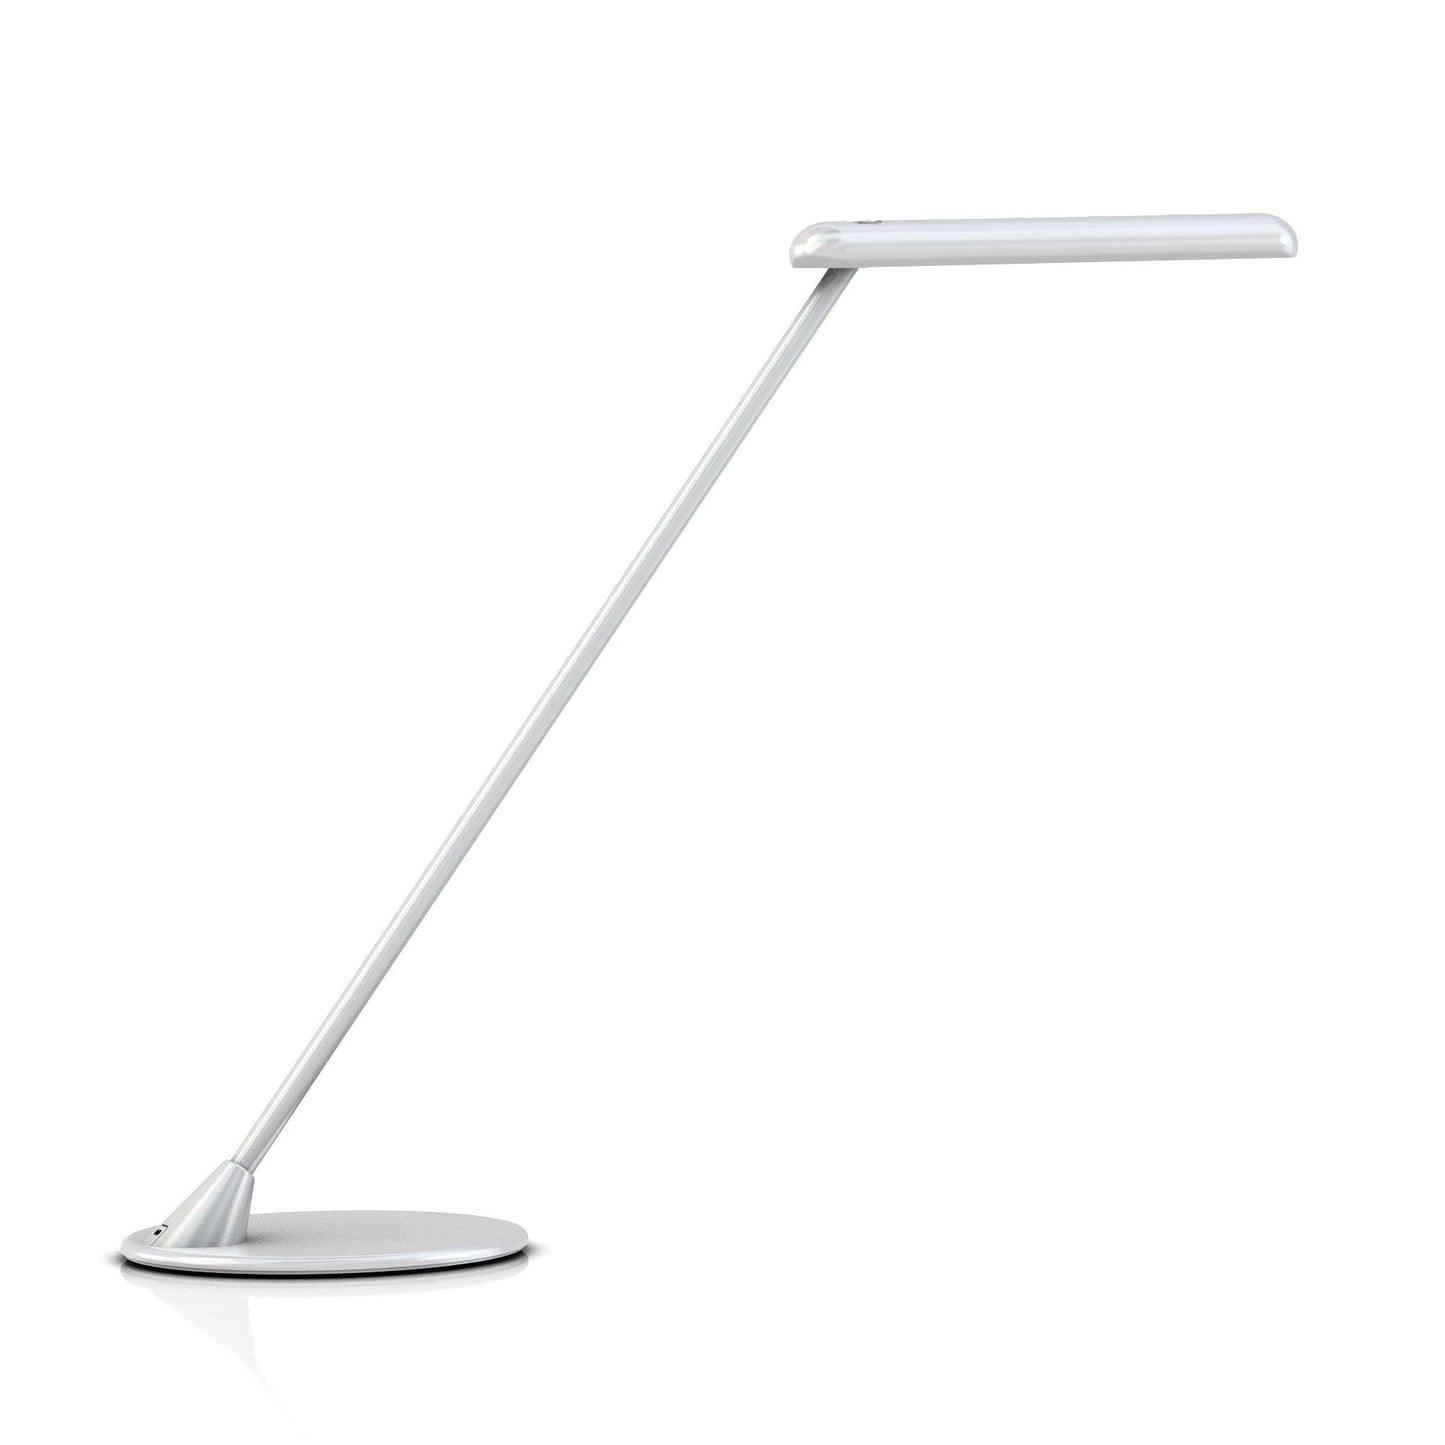 Flute Personal Desk Lamp